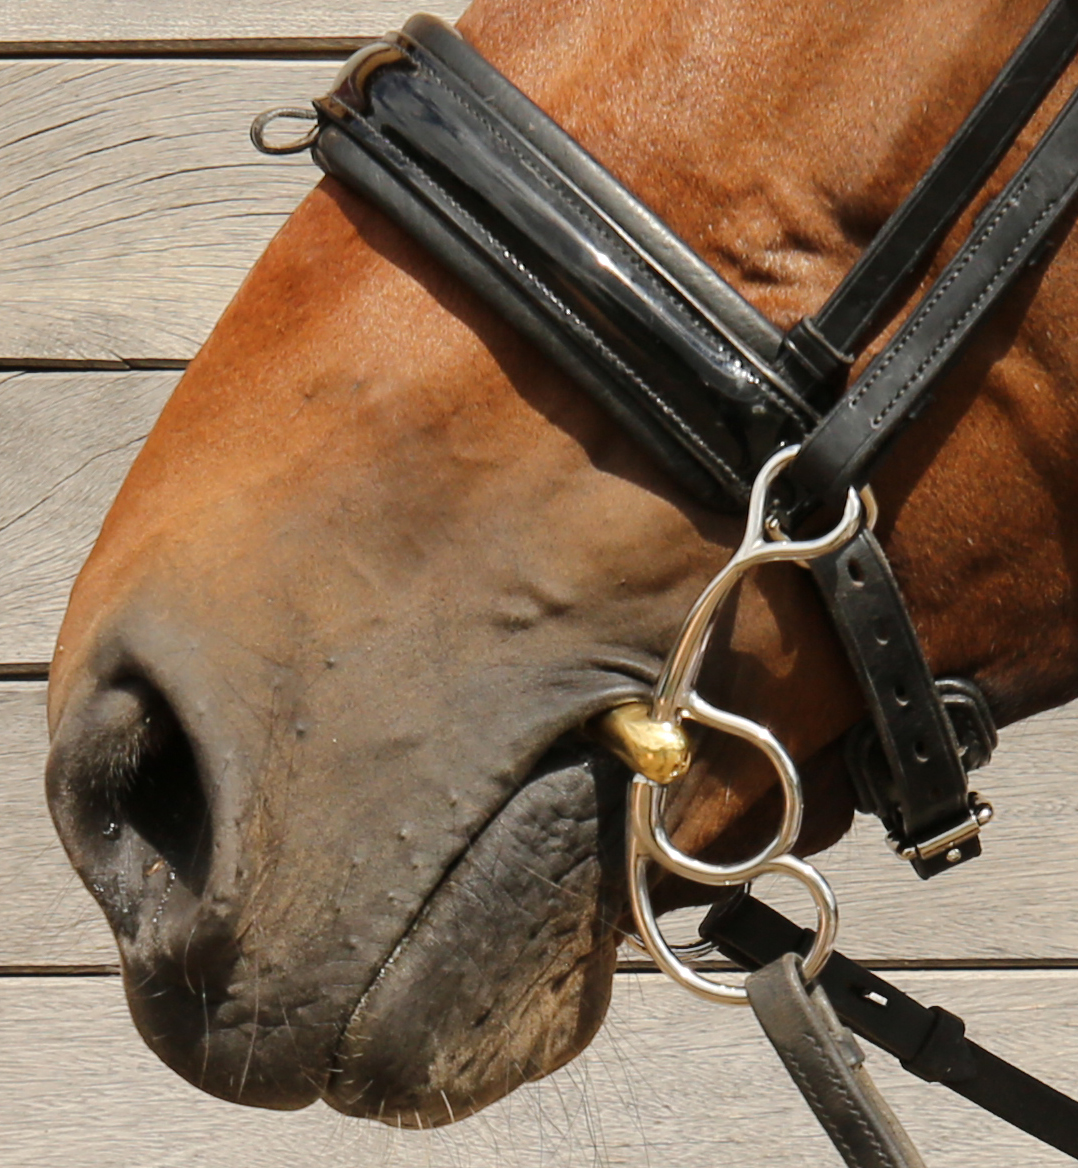 SPOT-ON Cheek bit in horses mouth